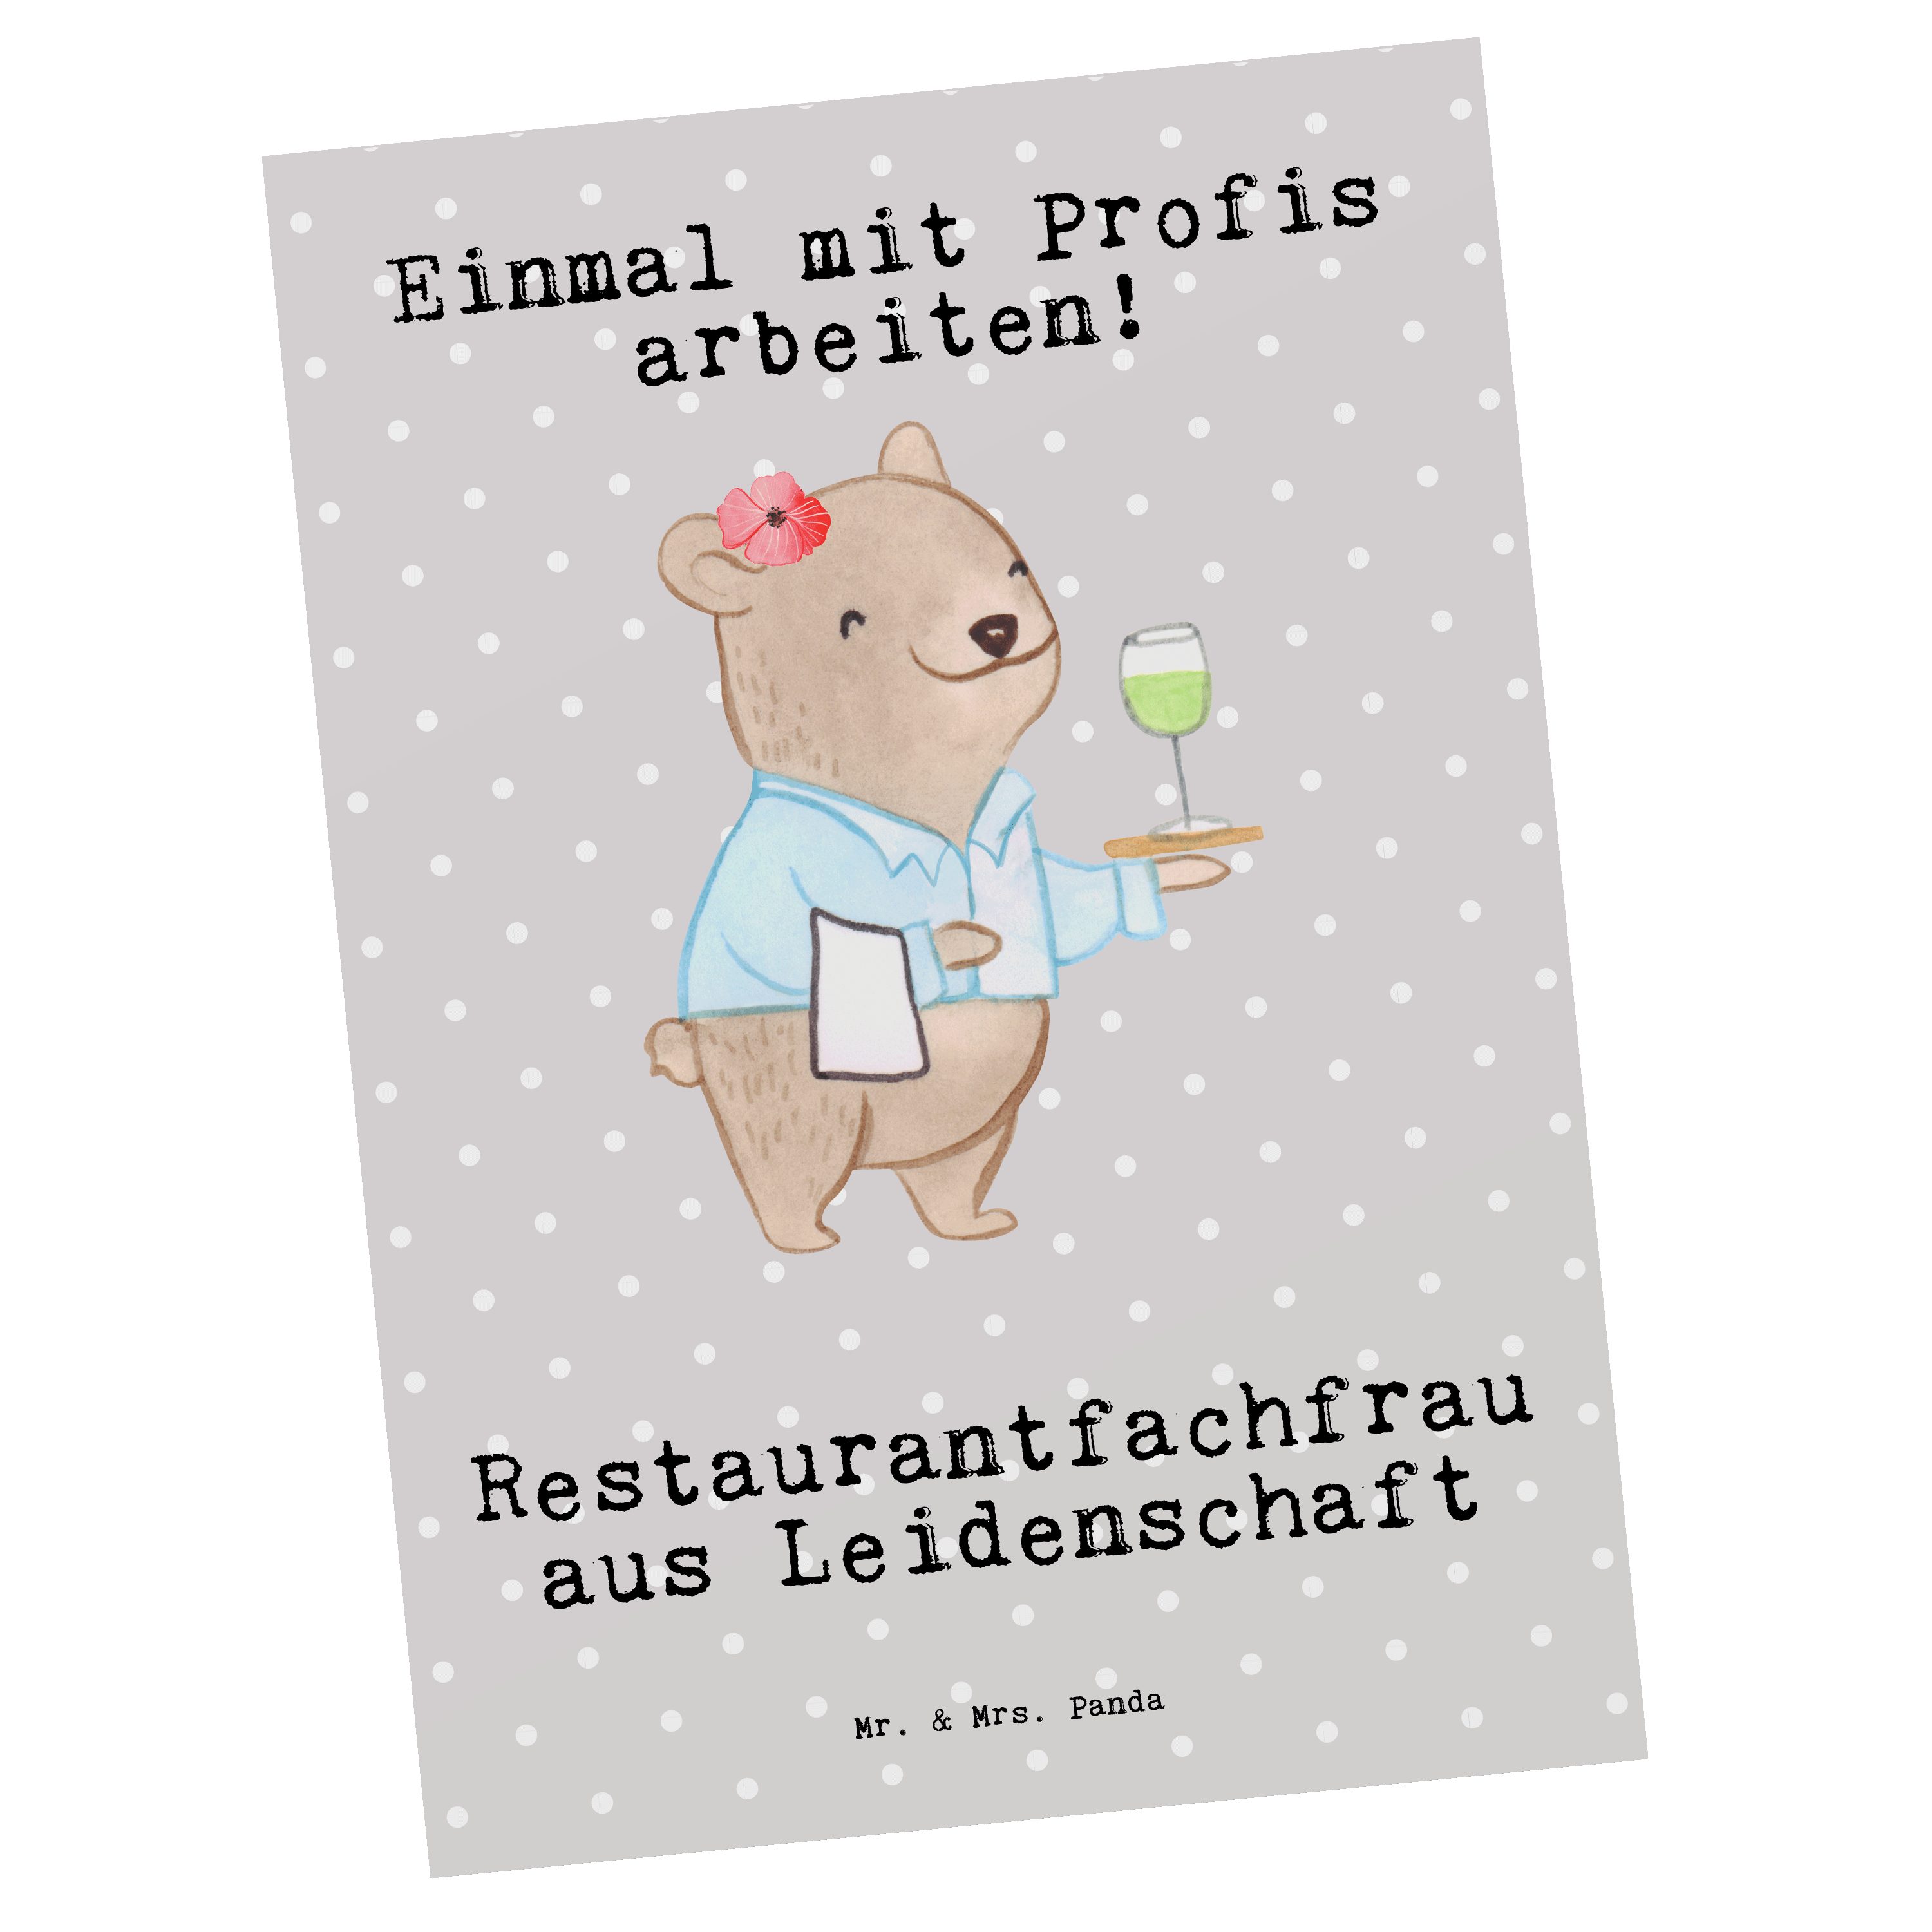 Gesche aus - Geschenk, Restaurantfachfrau Leidenschaft Mrs. - Grau Pastell & Panda Mr. Postkarte